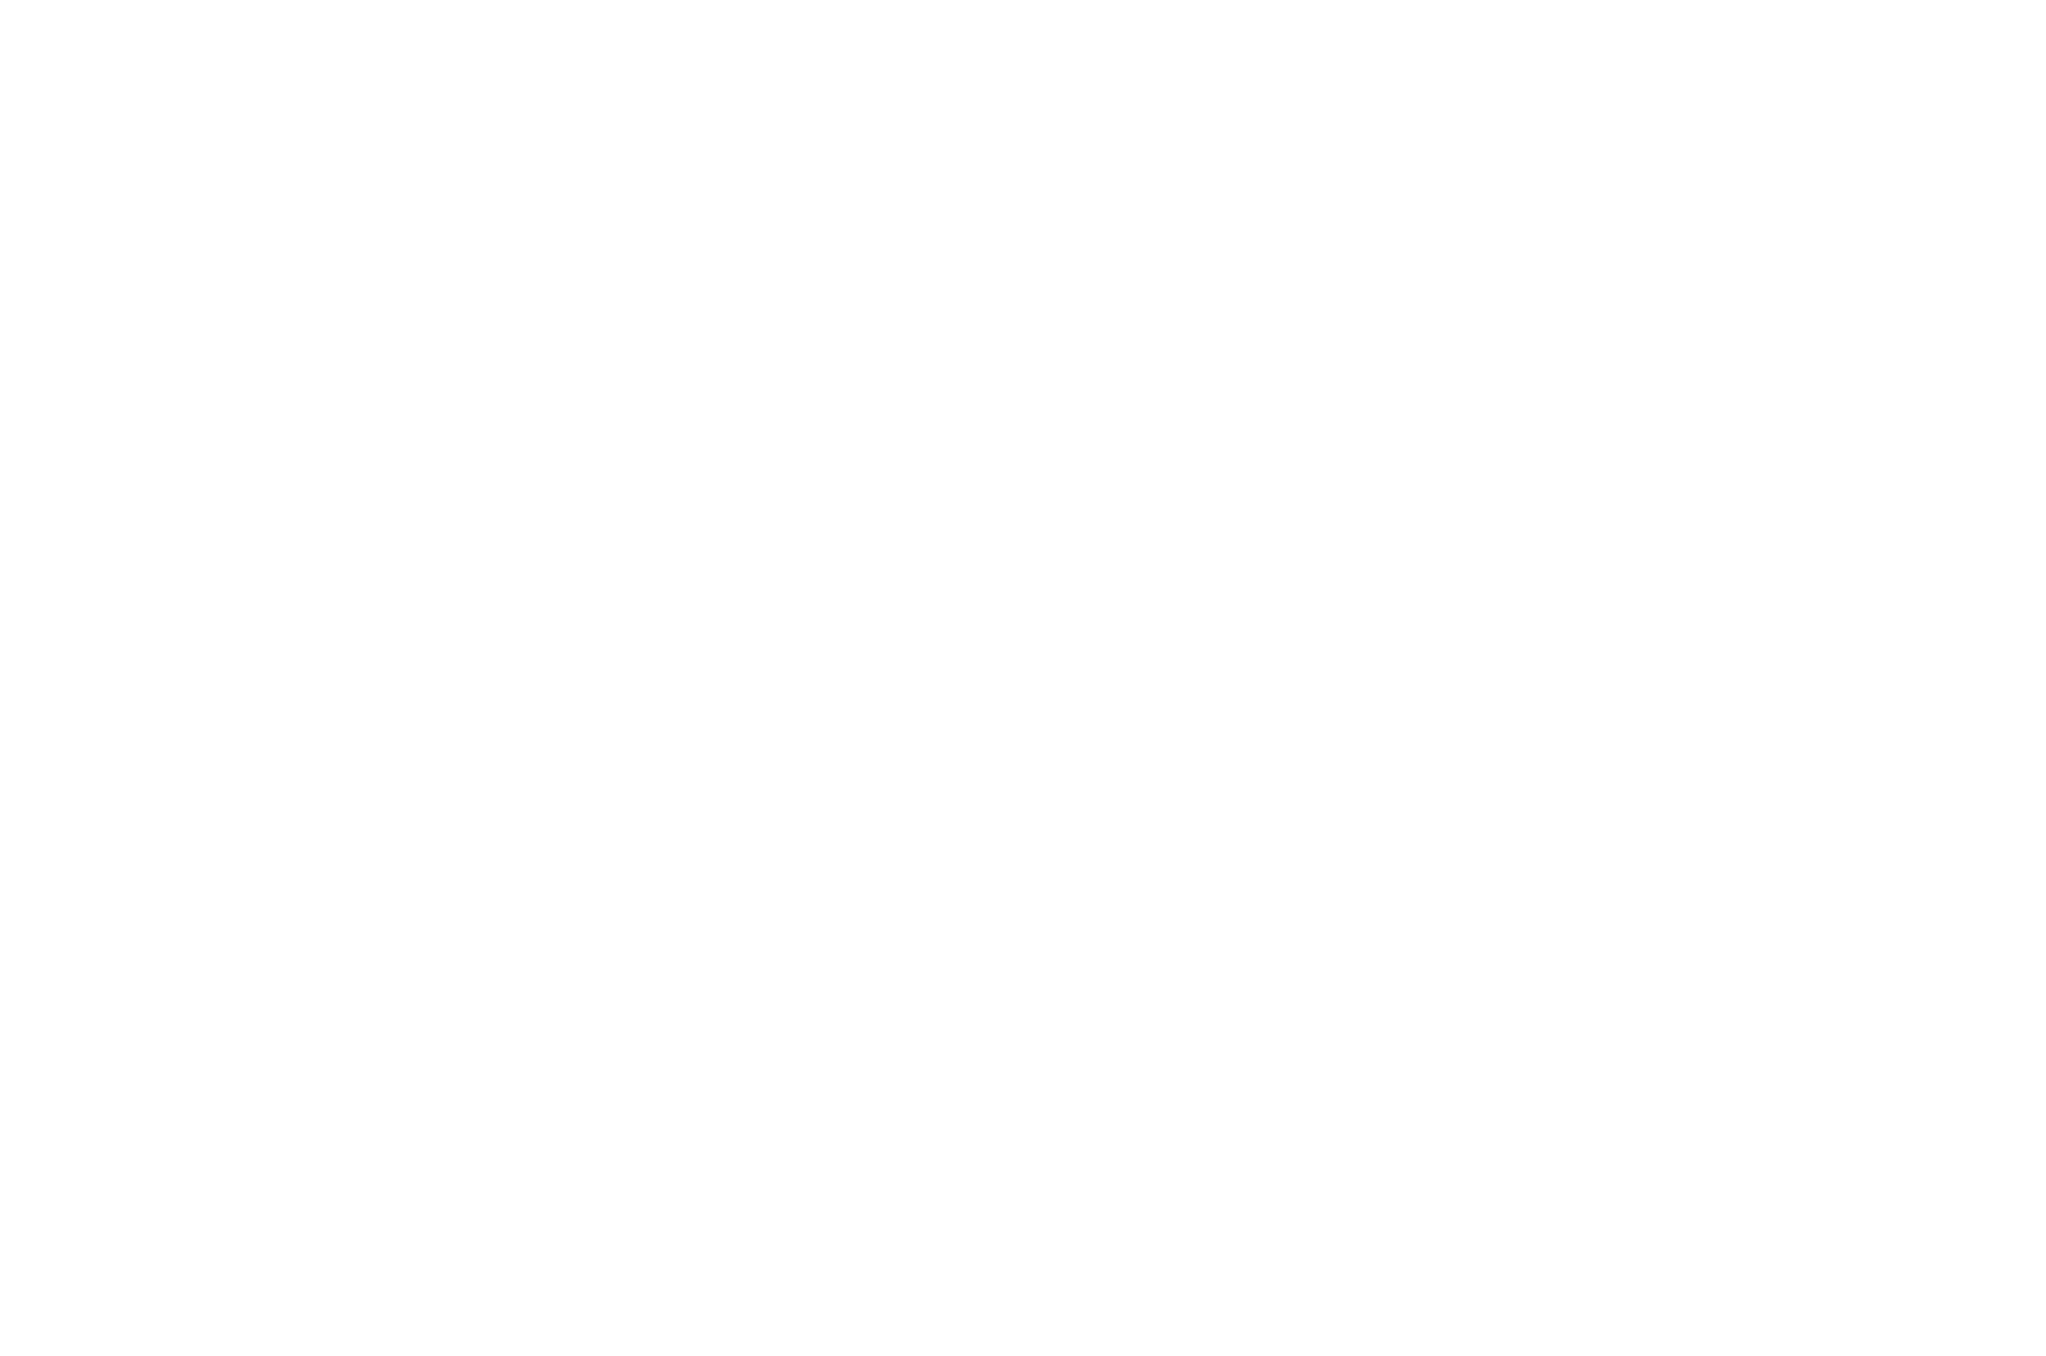 Airplane James logo